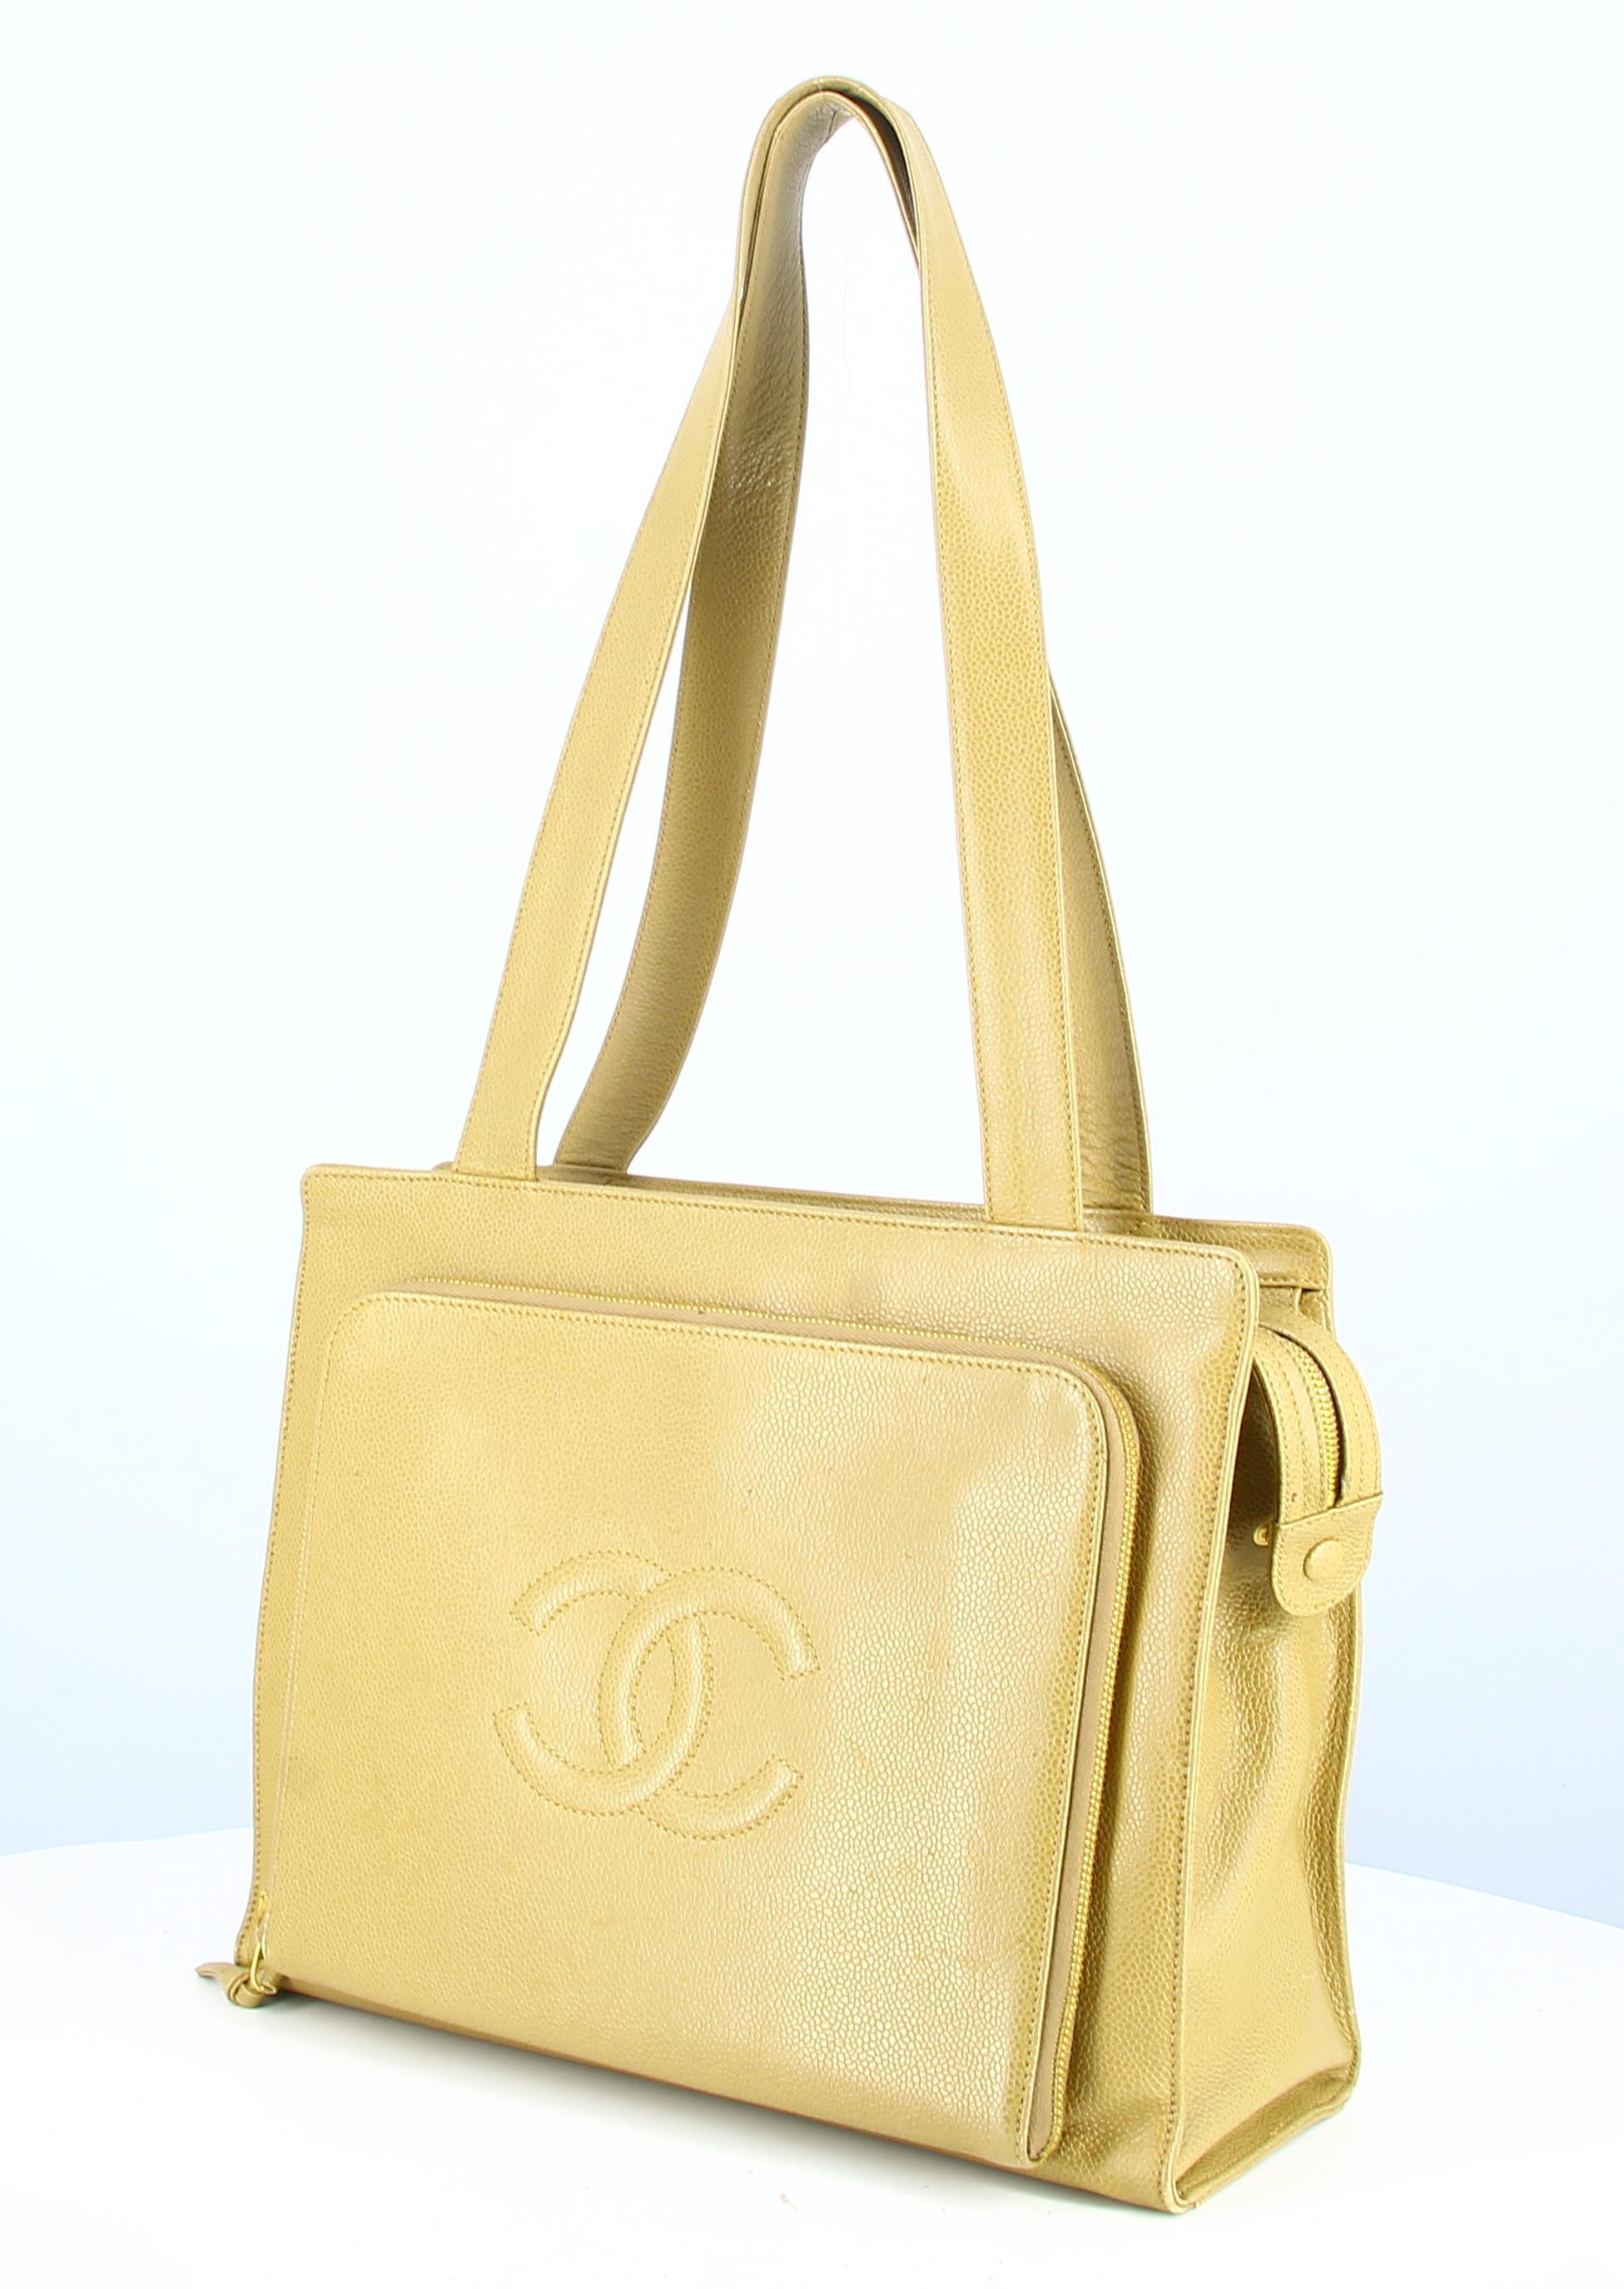 Chanel Deauville Shoulder Bags for Women